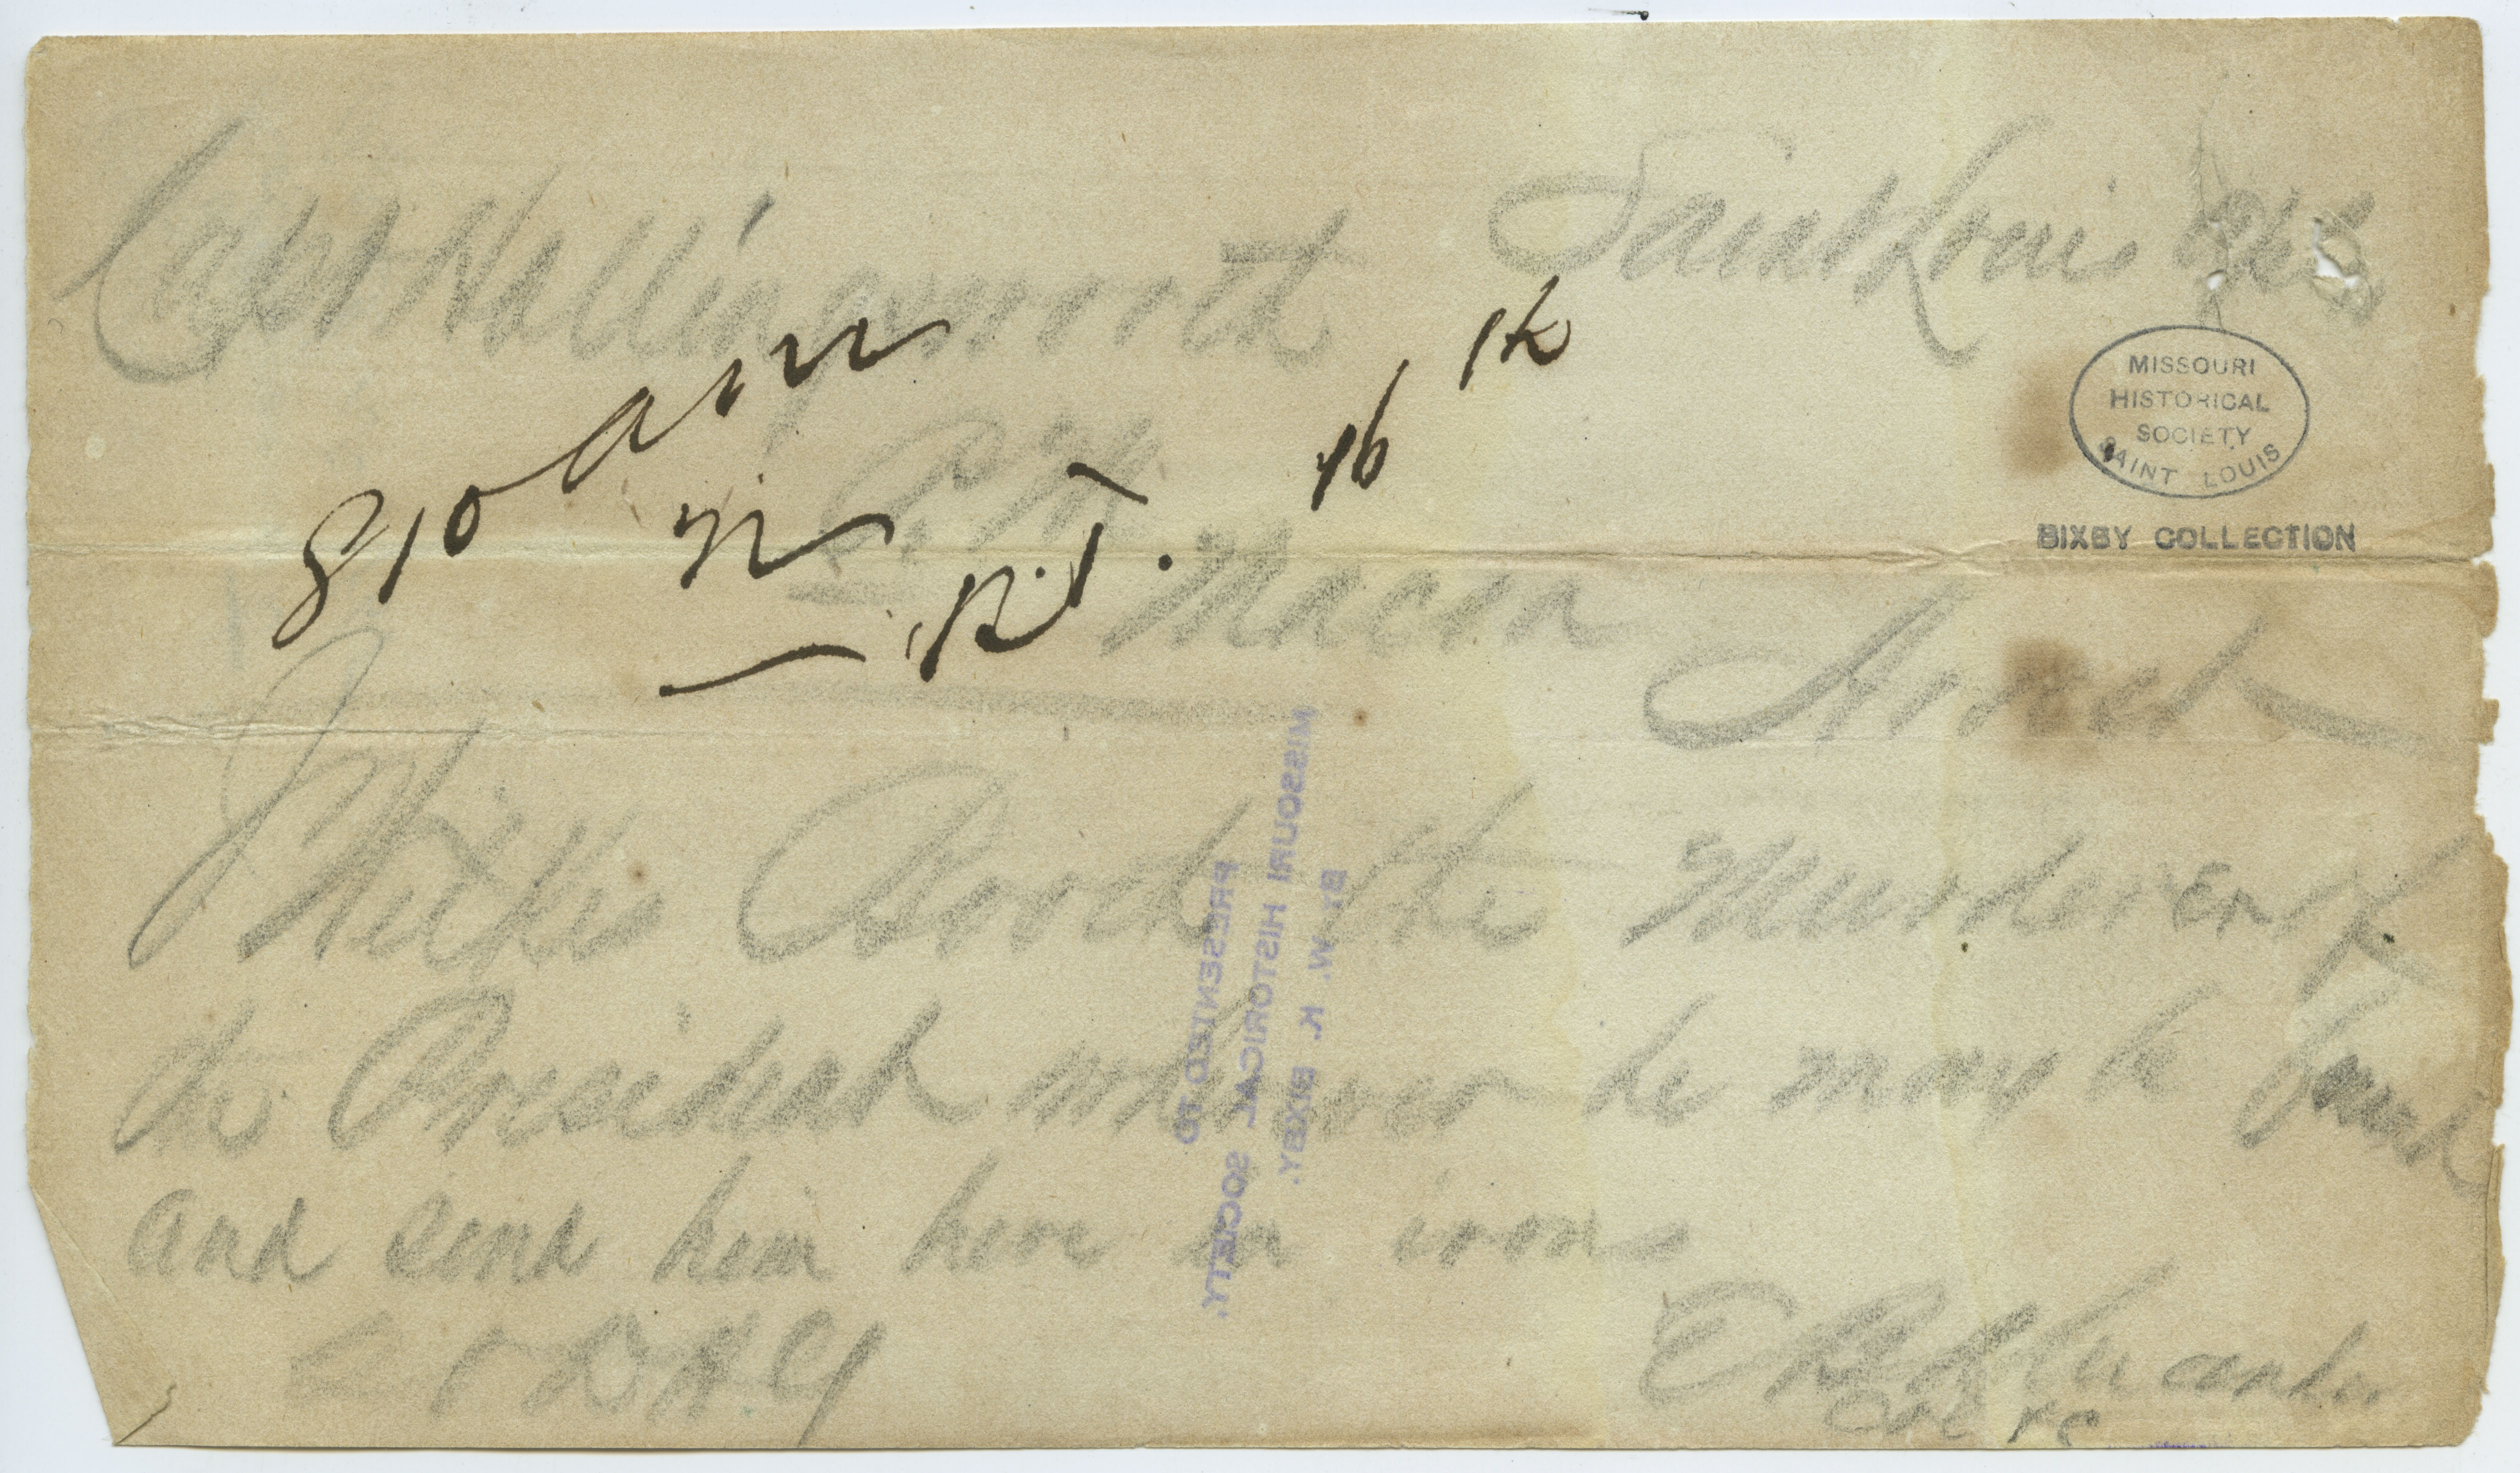 Contemporary copy of telegram of E. B. Alexander, Saint Louis, to Capt. Hollingsworth, Macon, [April 15, 1865]